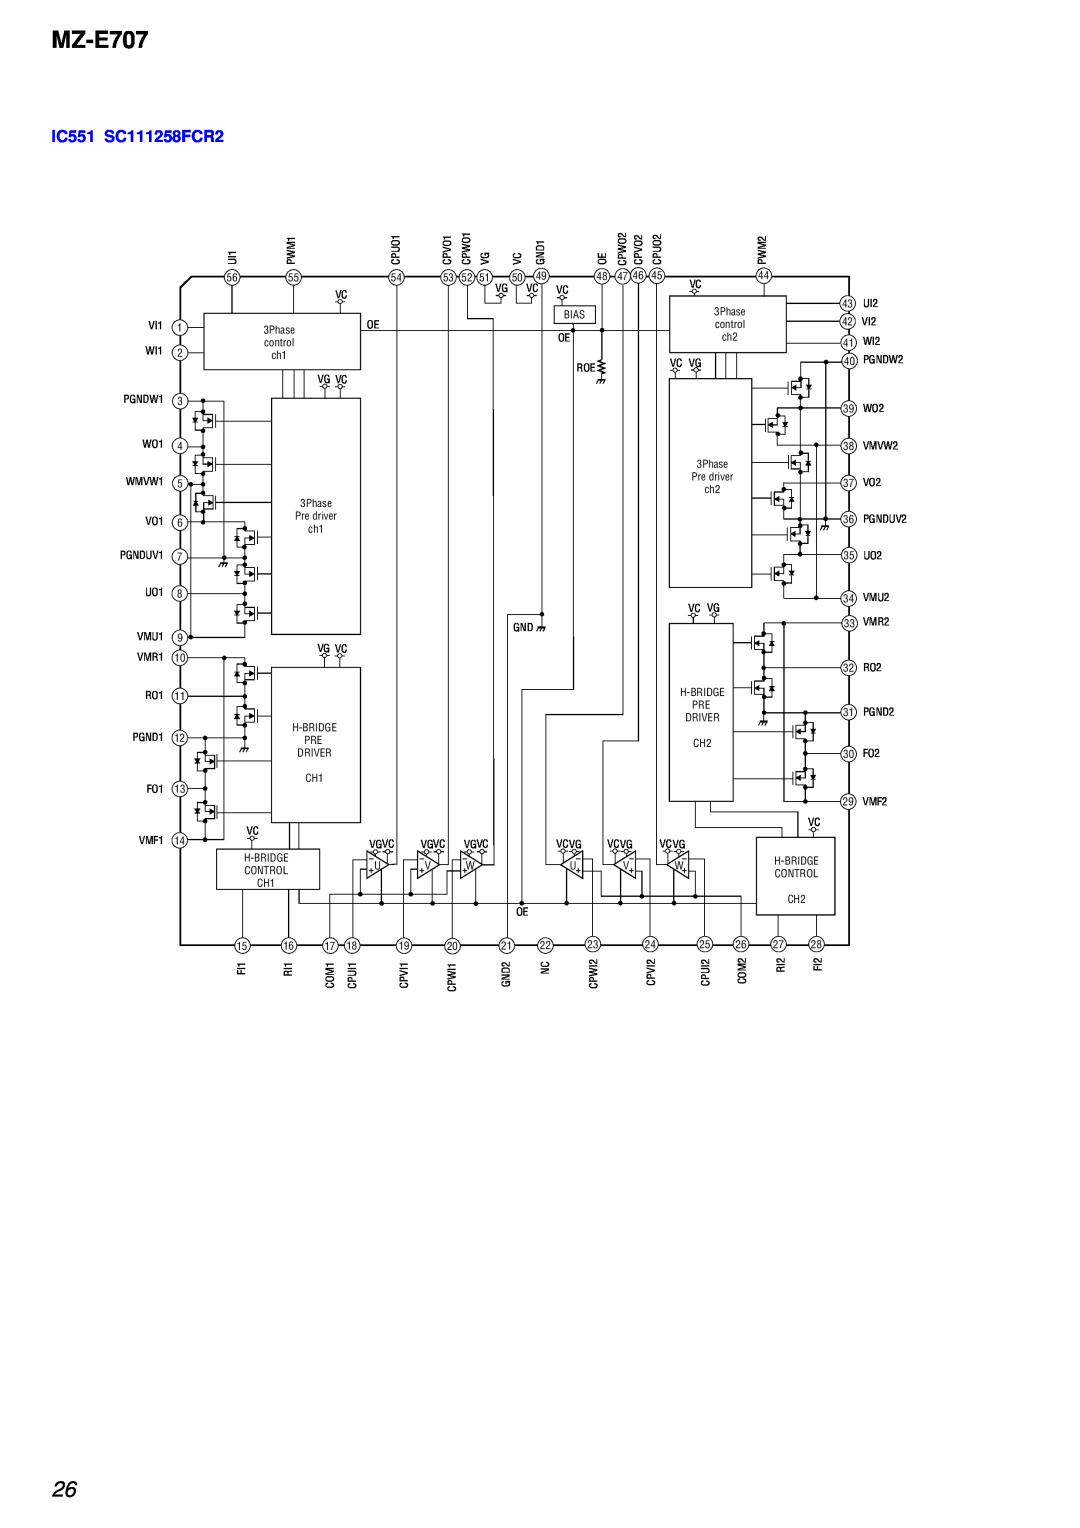 Sony MZ-E707 service manual IC551 SC111258FCR2 